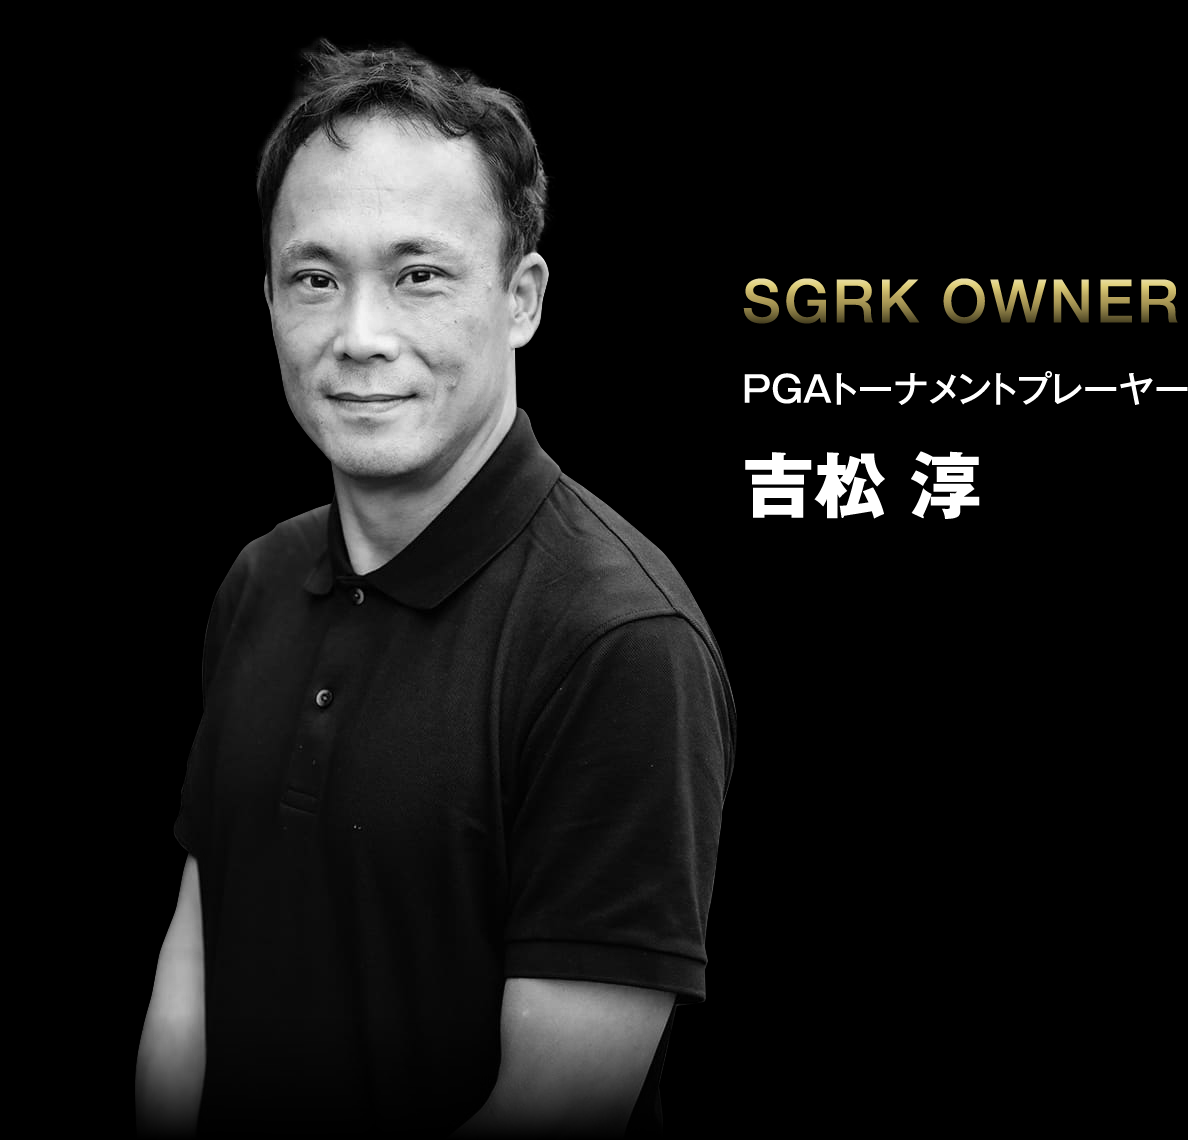 SGRK OWNER PGAトーナメントプレーヤー 吉松 淳